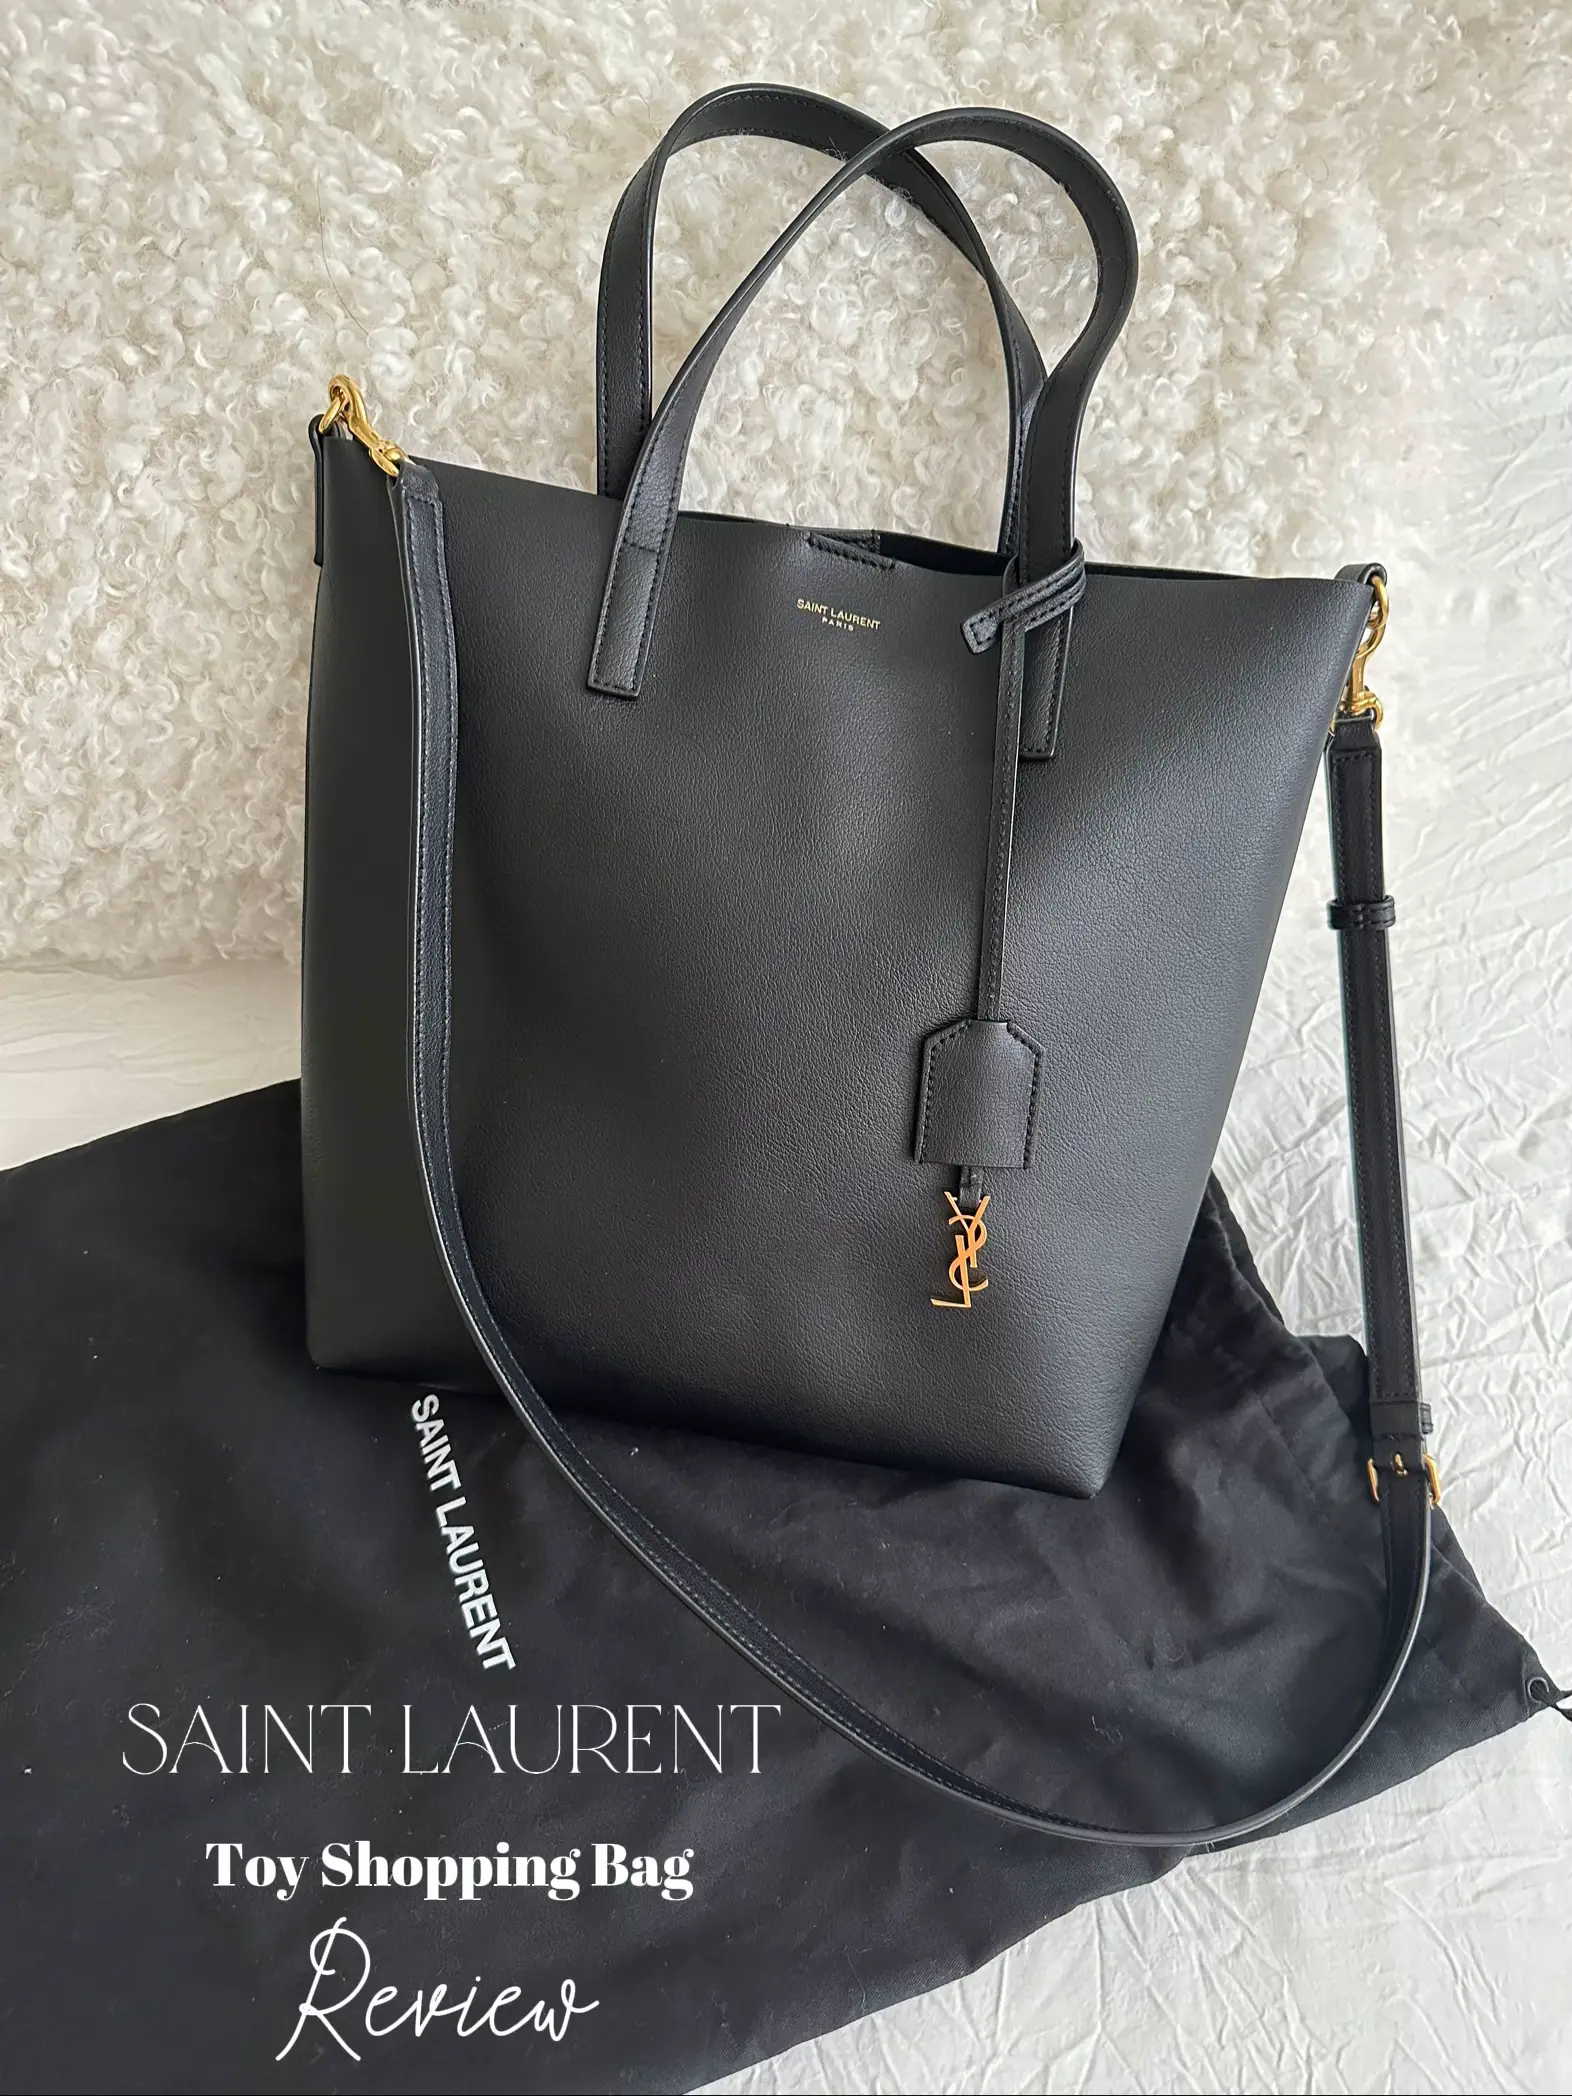 Saint Laurent Toy Shopping Bag Review